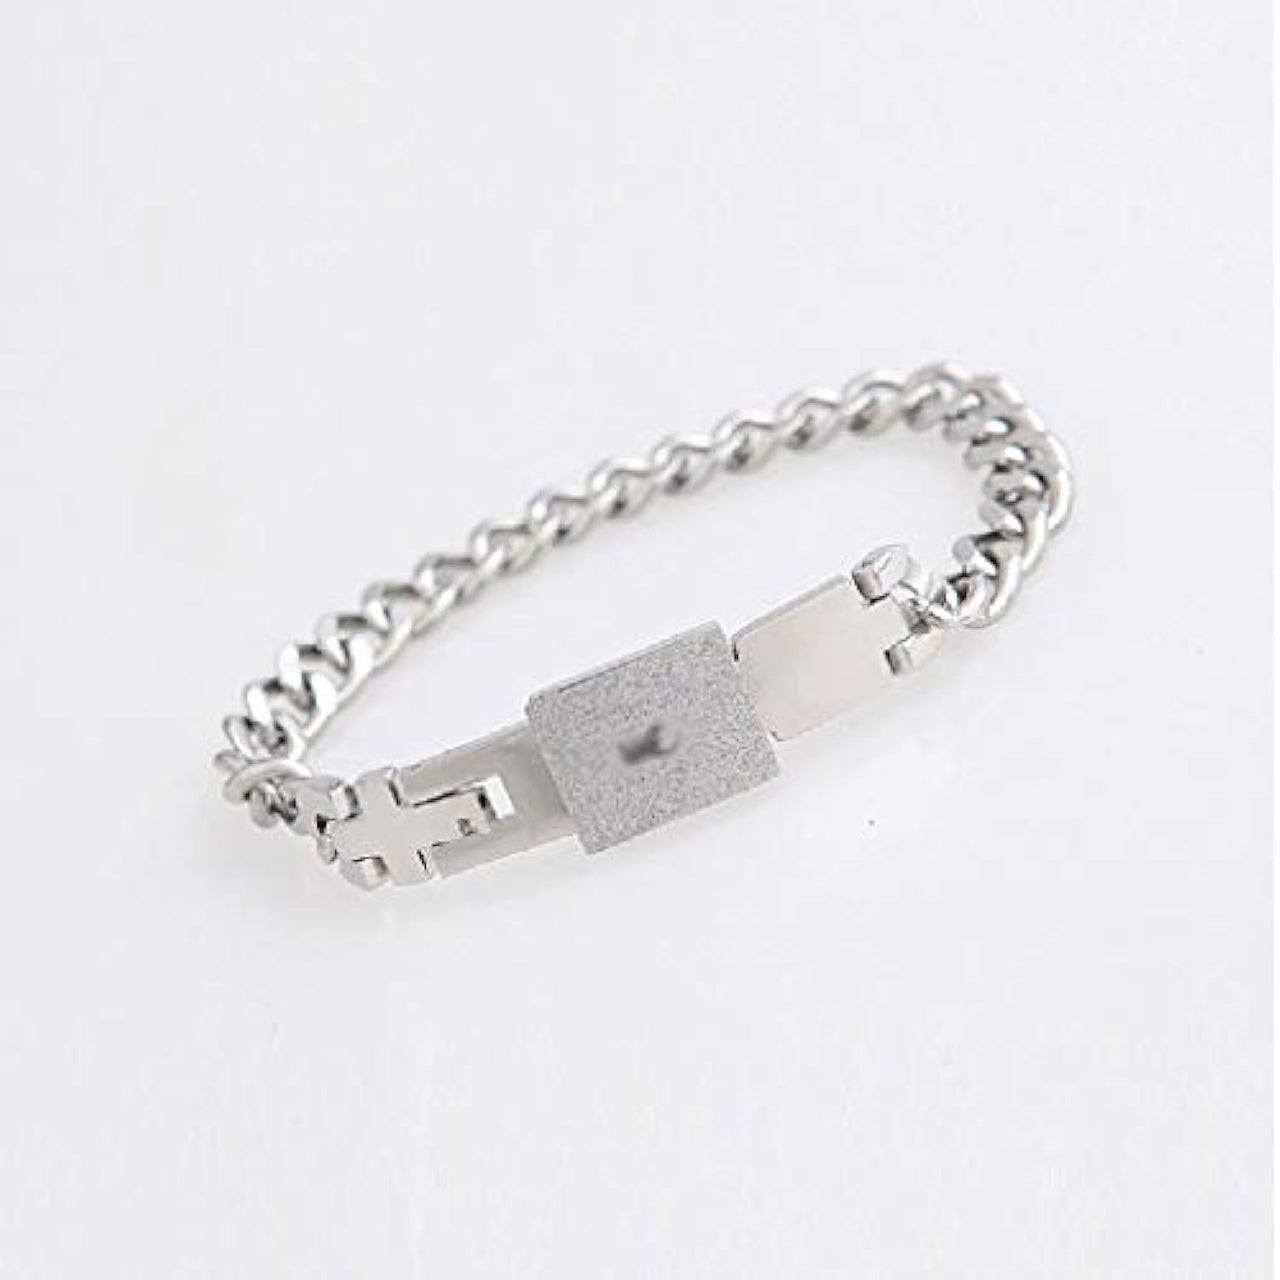 🌲Early Christmas Sale - SAVE OFF 60%🎁 Bracelets Love Heart Key Lock